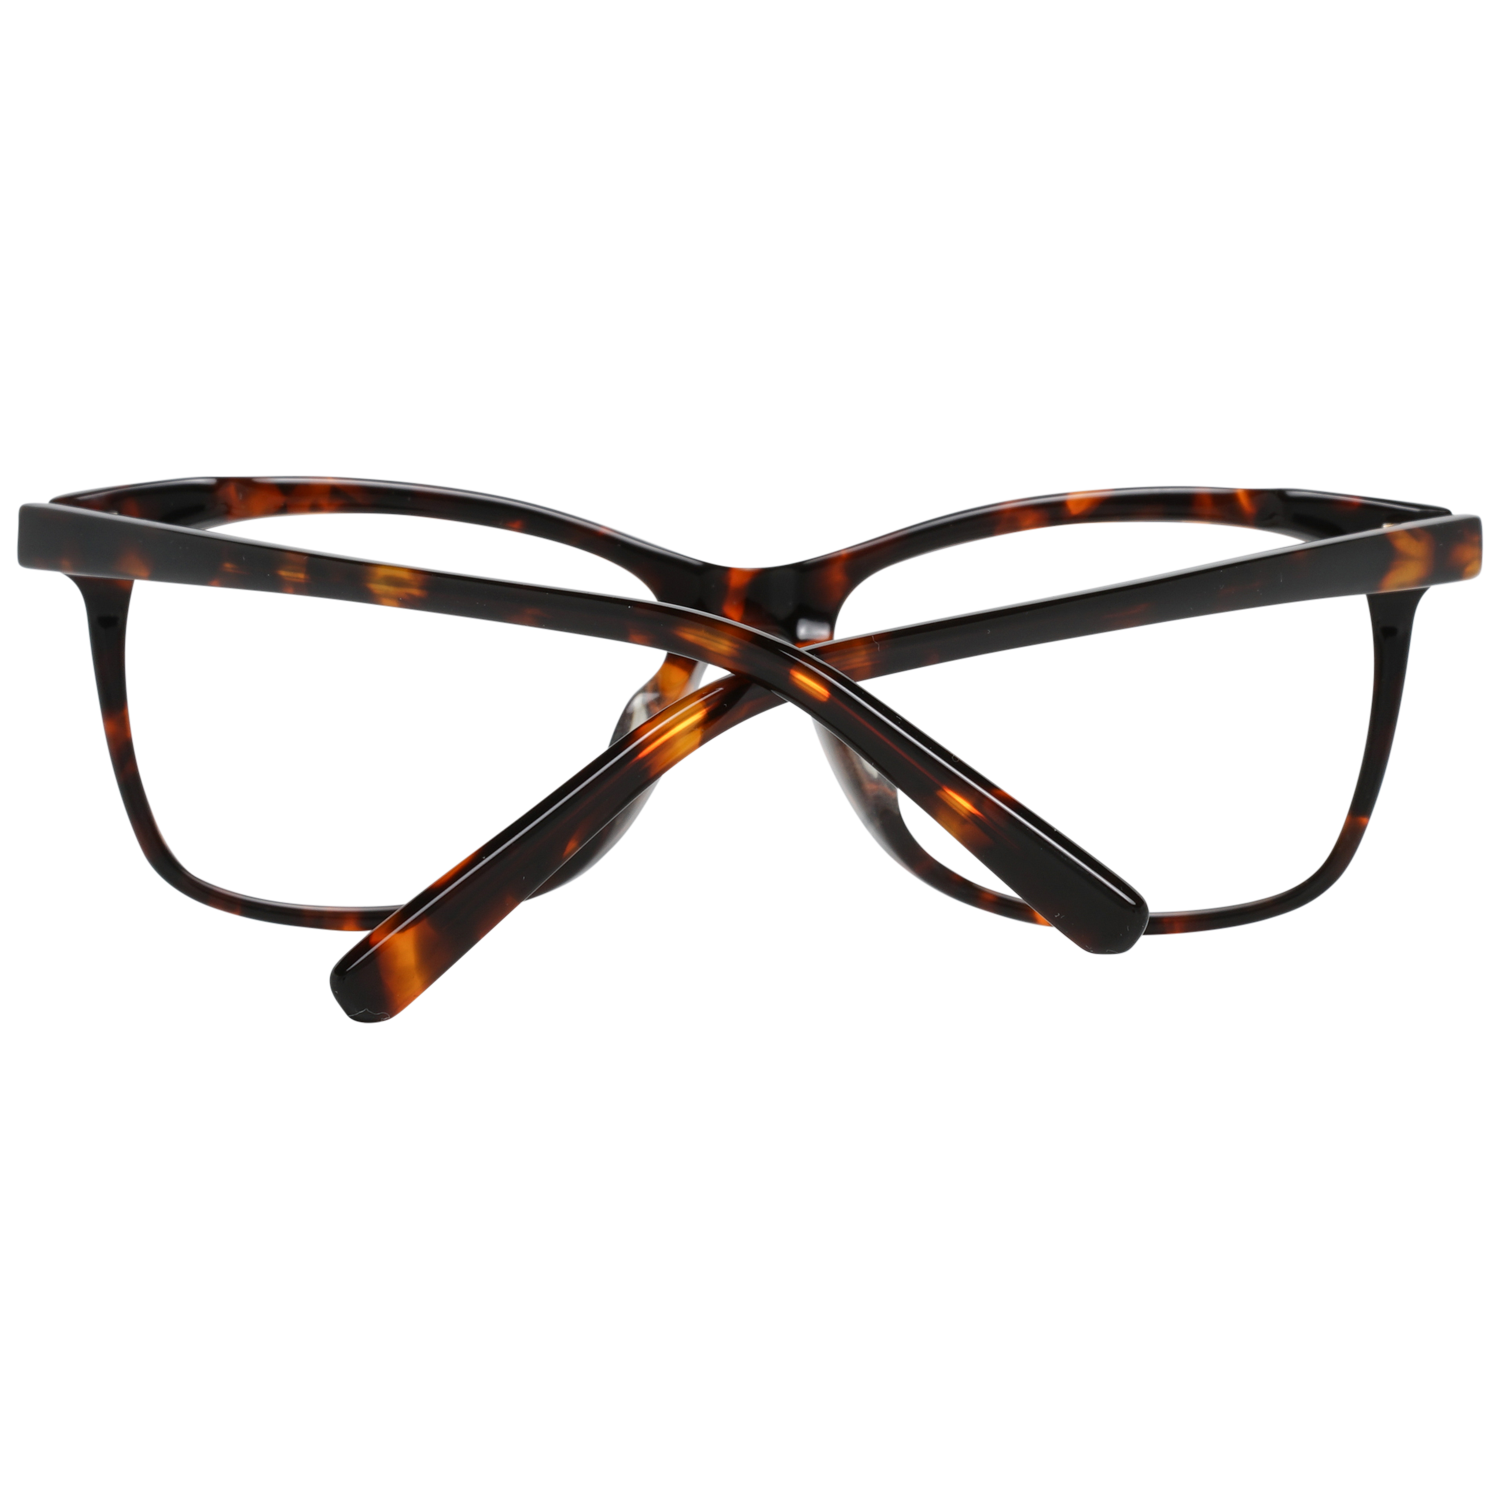 Bally Optical Frame Bally Eyeglasses Frames BY5003-D 052 54 Eyeglasses Eyewear UK USA Australia 